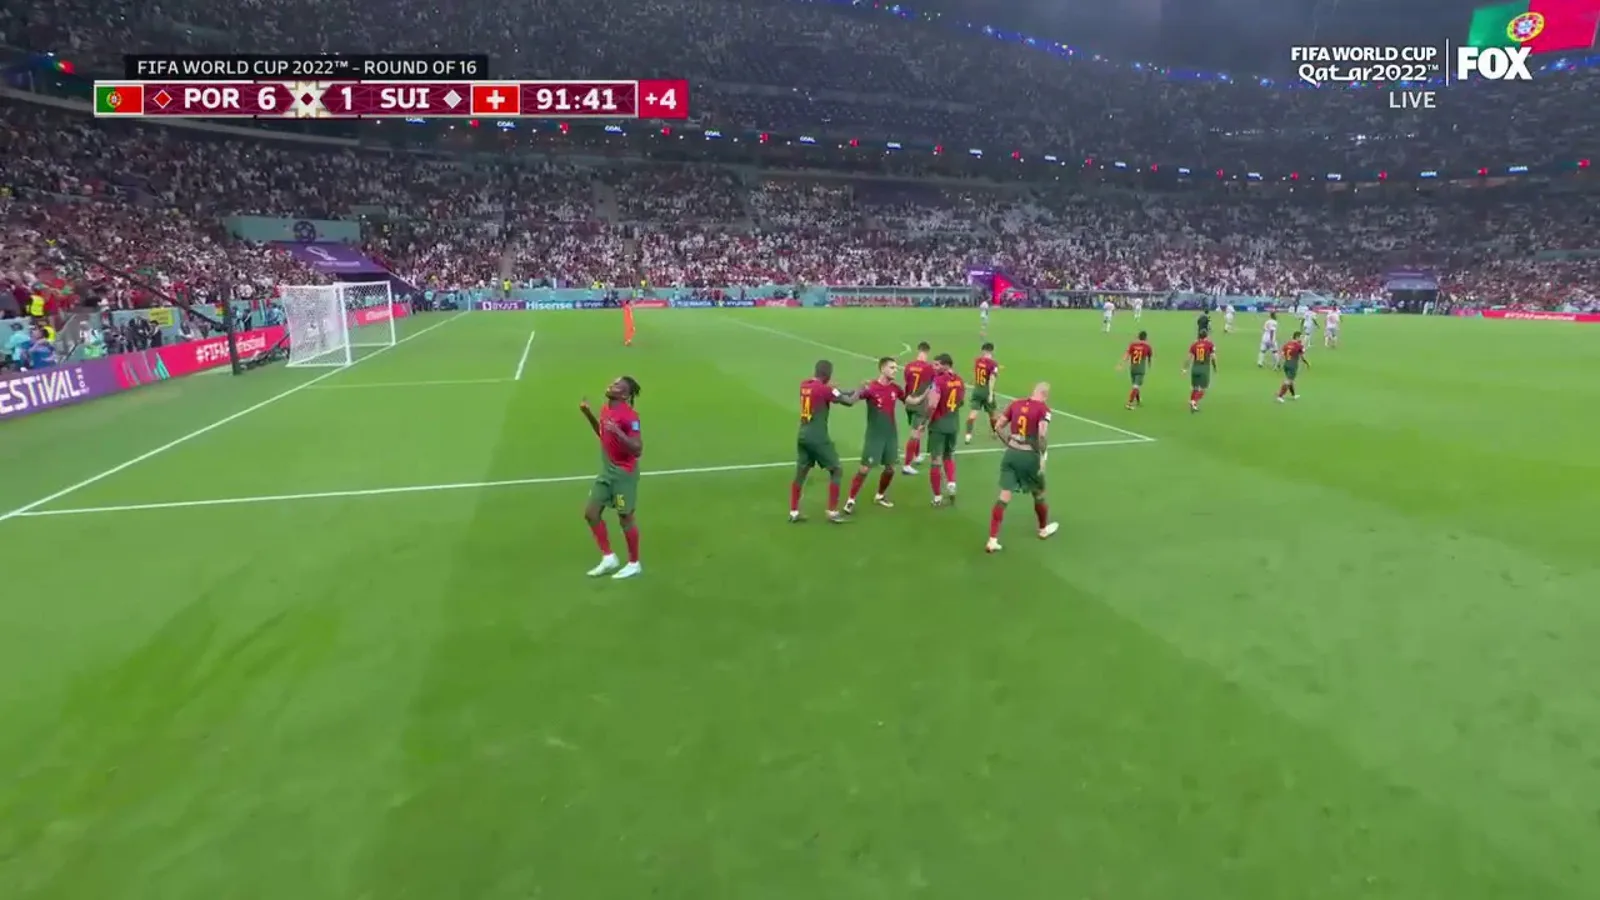 Portugal's Rafael Leao scores goal vs. Switzerland in 90+2'